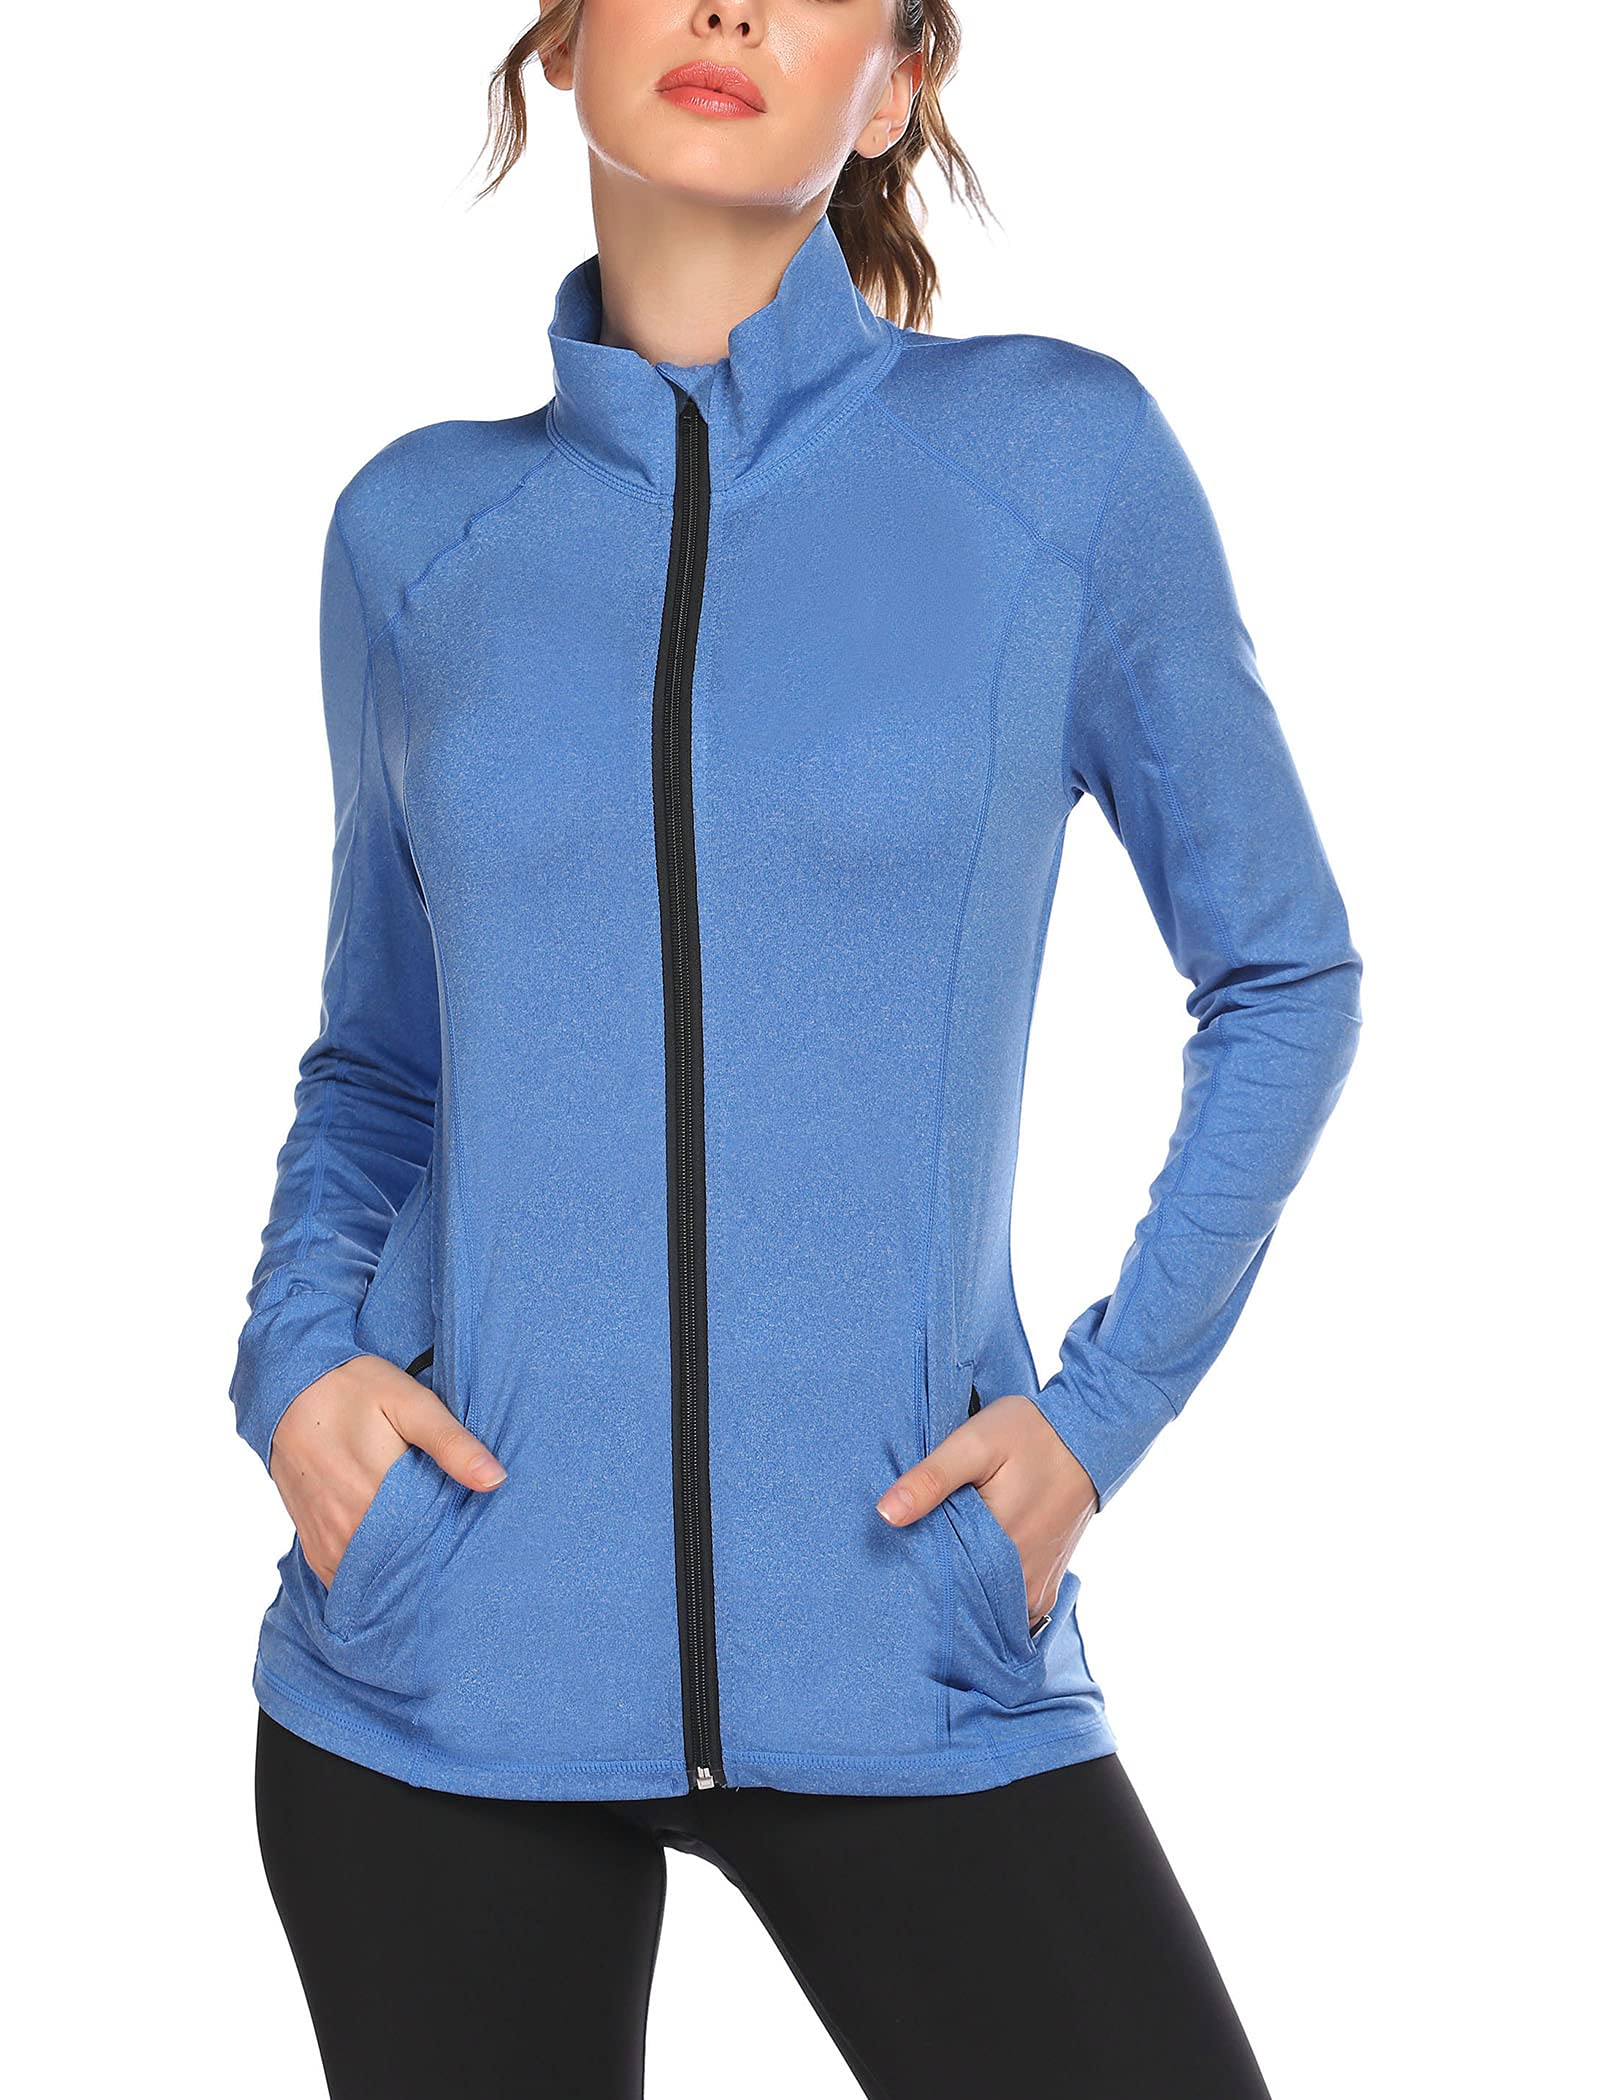 ELESOL Women's Running Jacket Full Zip Workout Jacket Activewear Track  Jacket for Women S-XXL Blue Heather Small